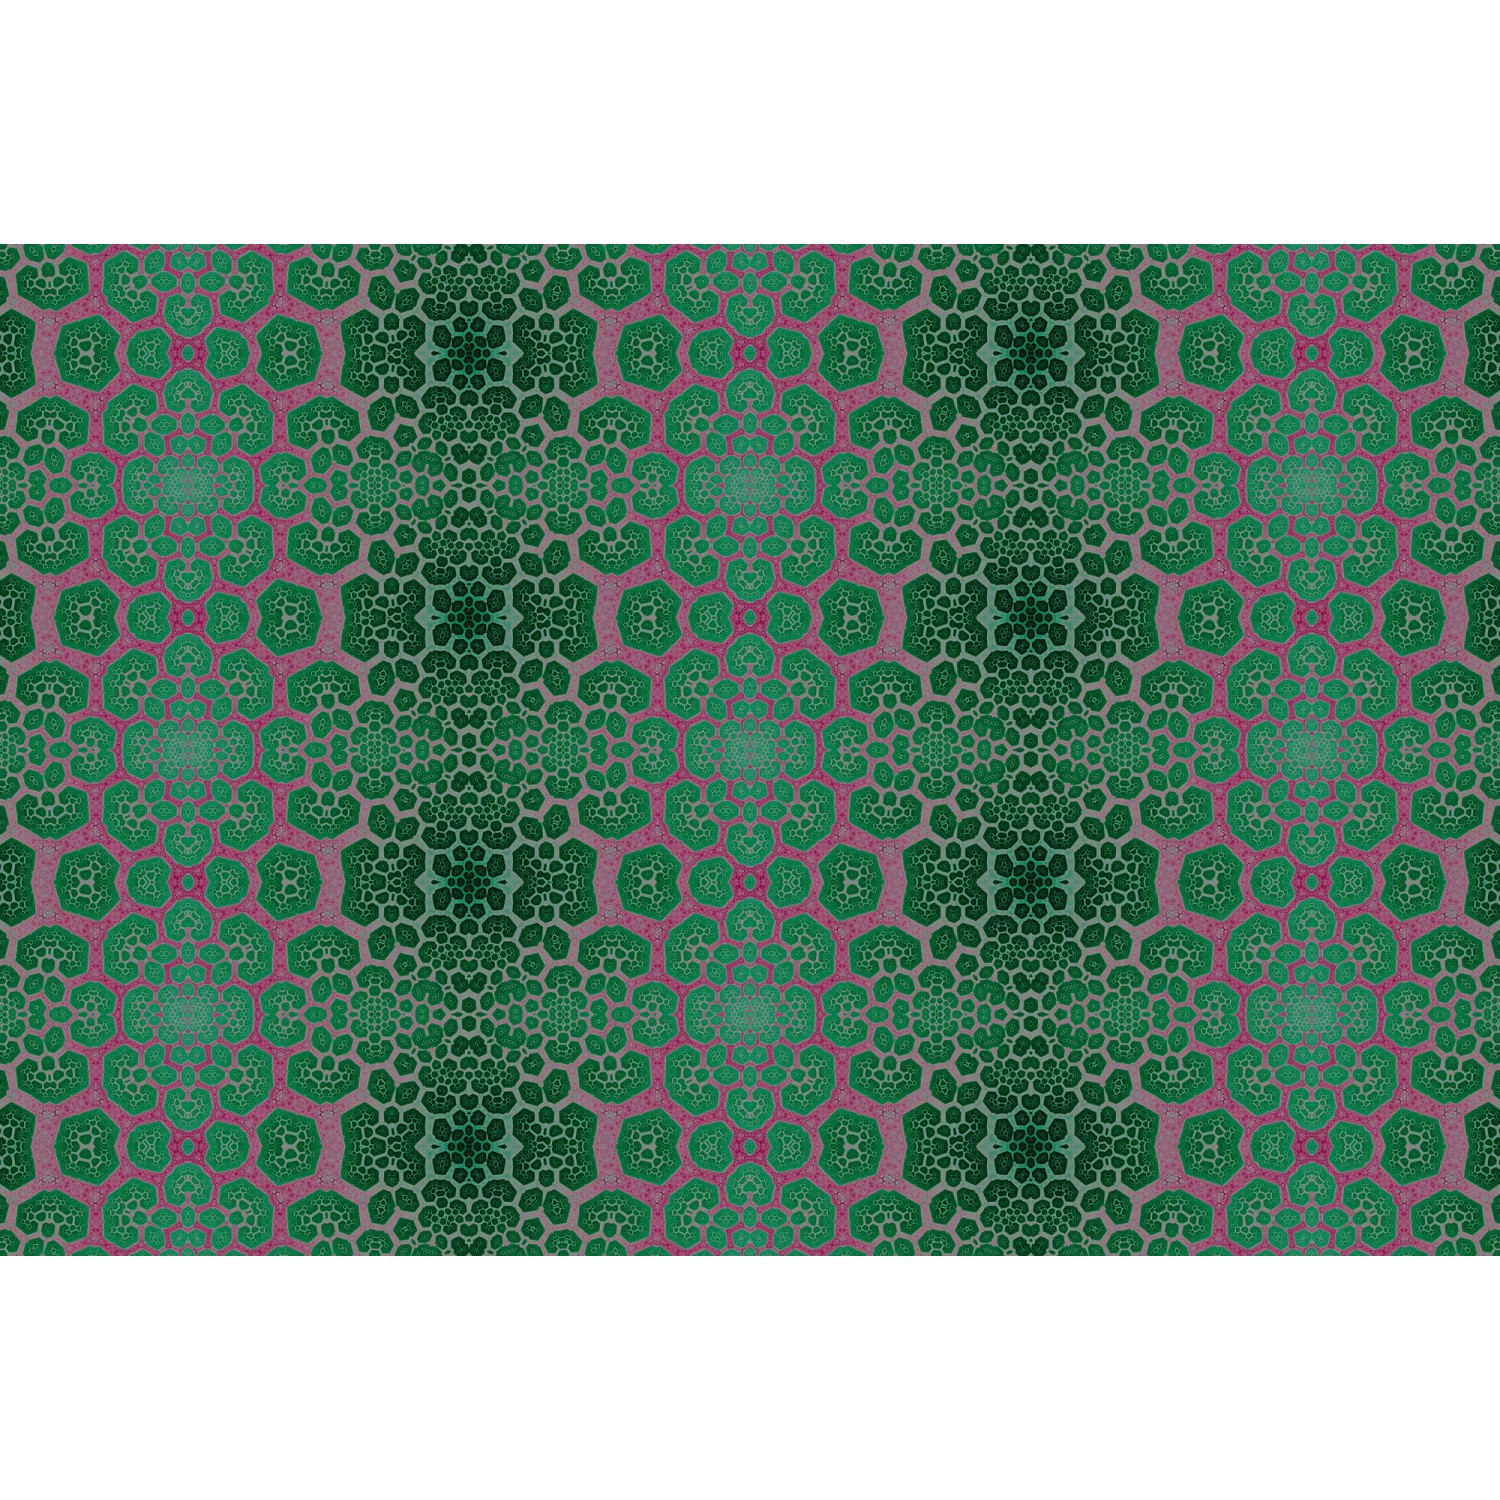 Fototapete Abstrakt Grün Lila 4,00 m x 2,70 m FSC® von -